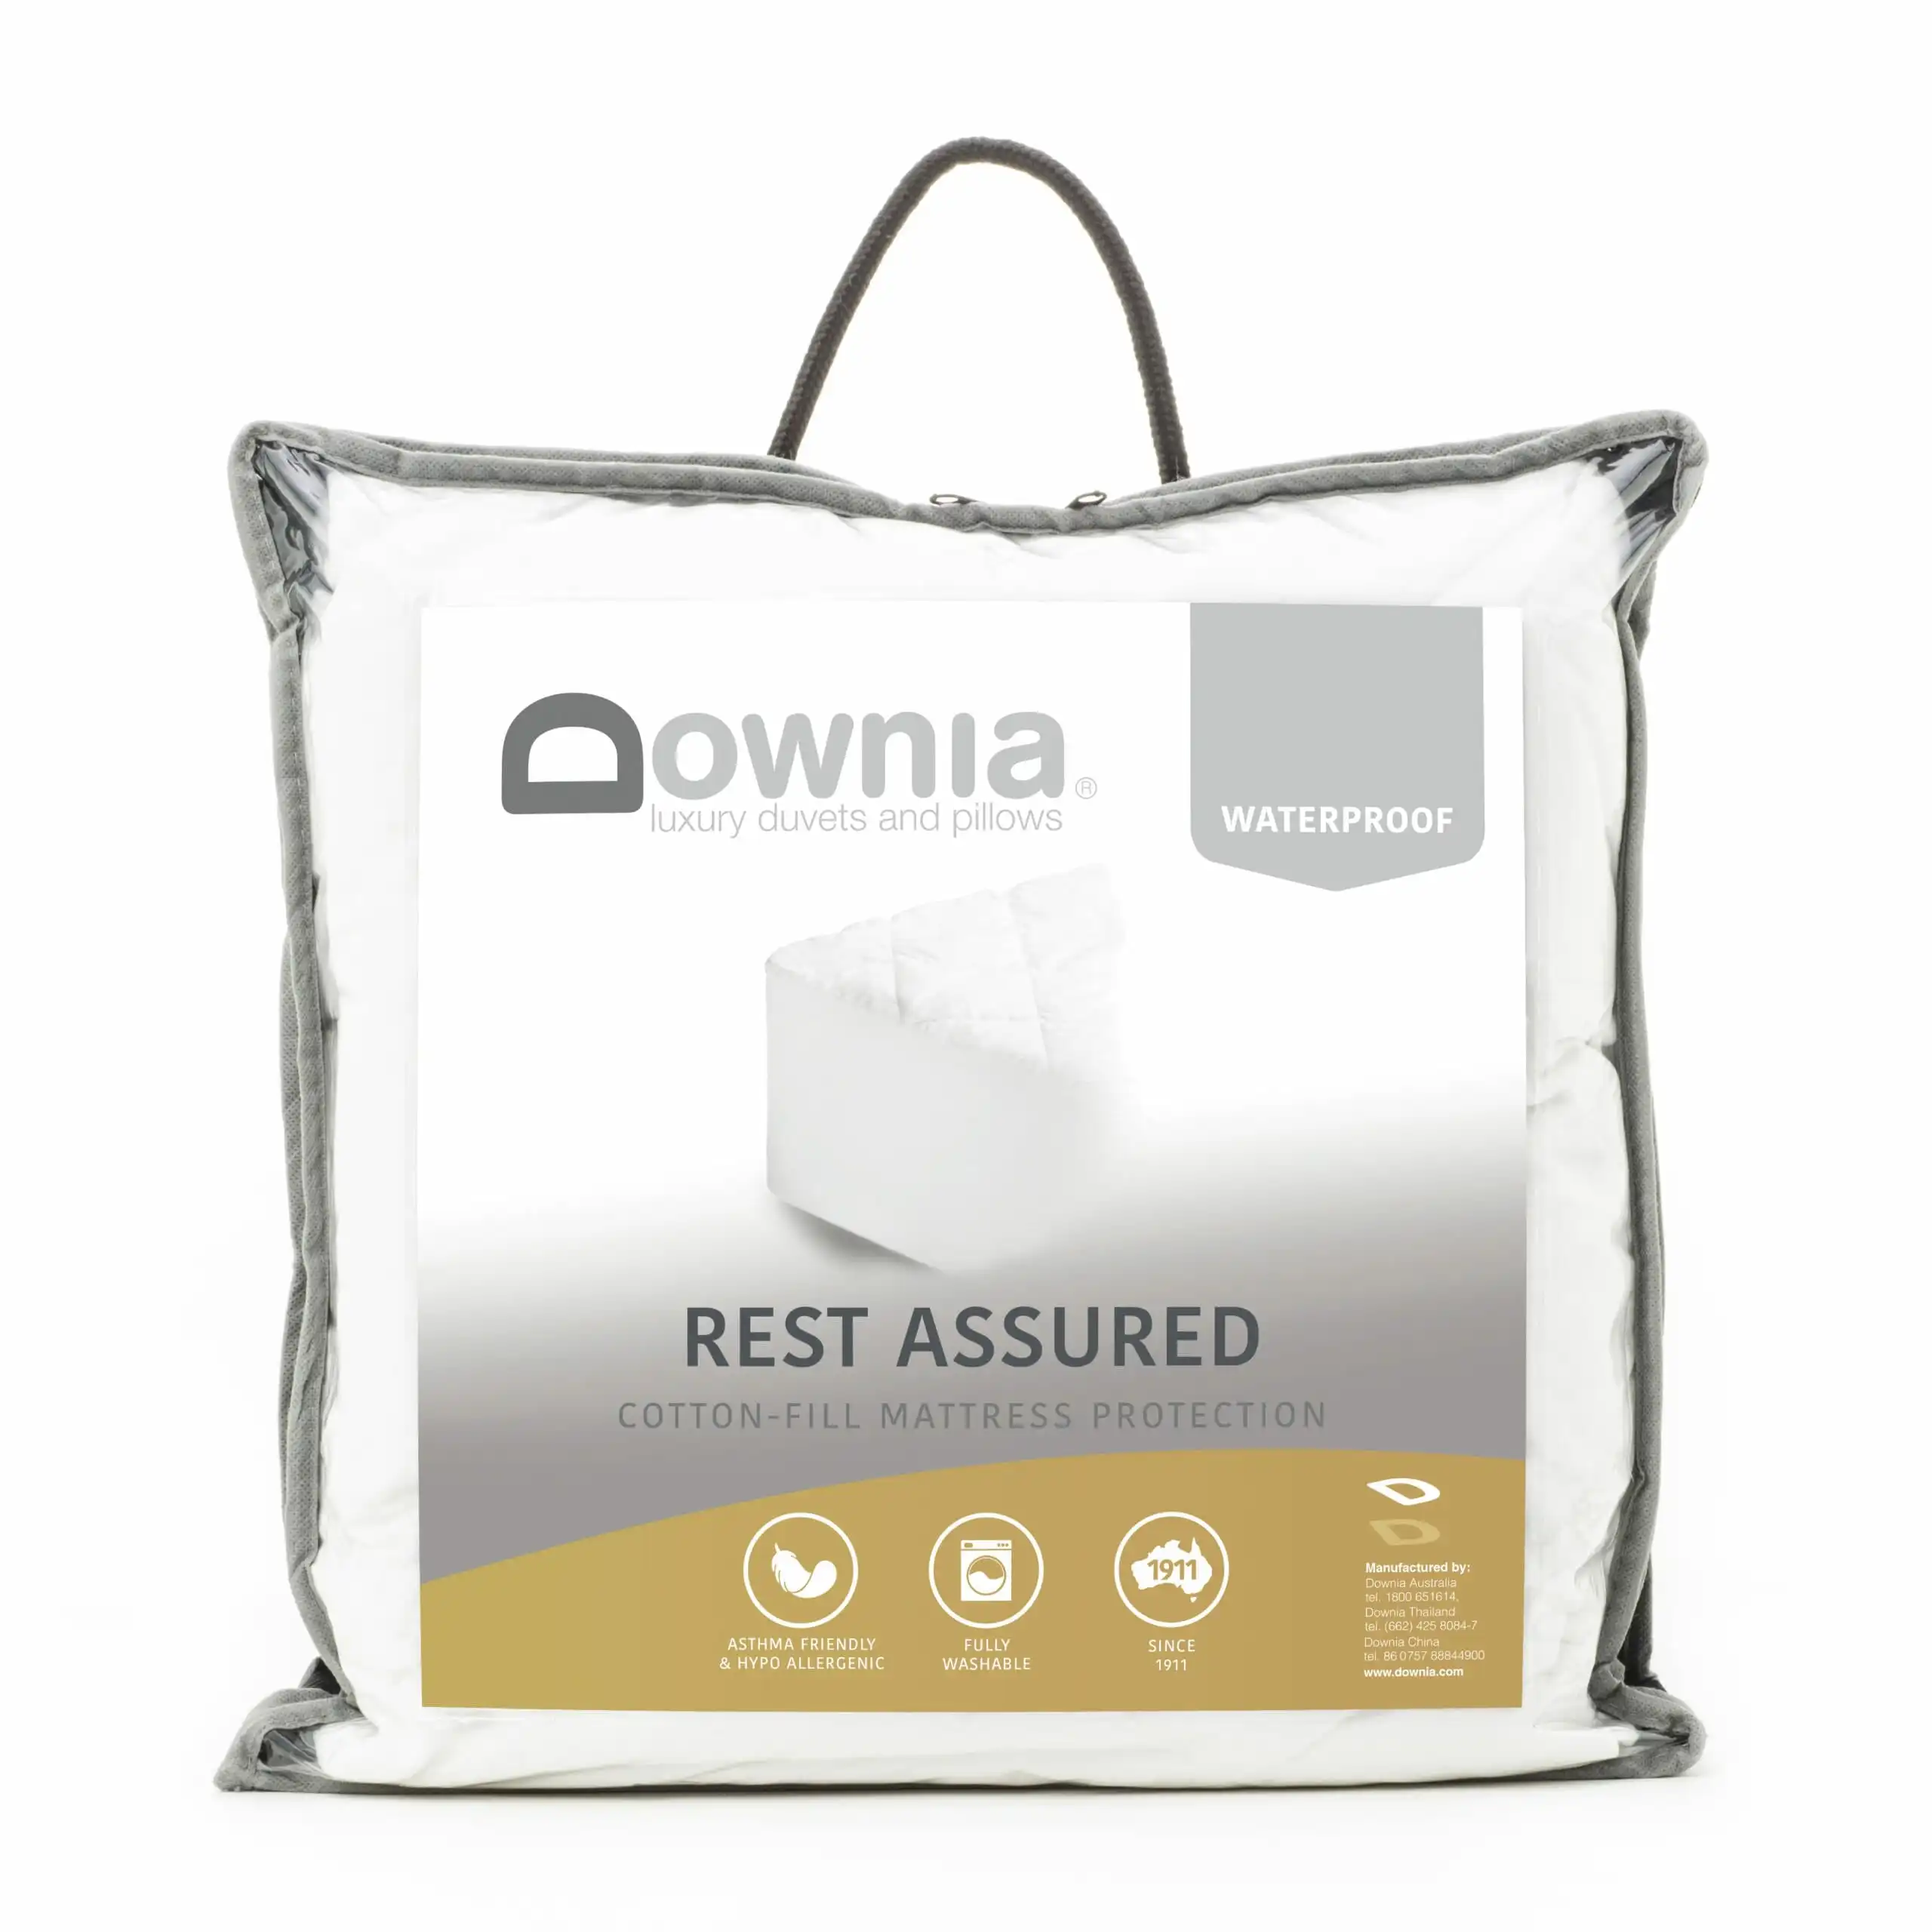 Downia Rest Assured MATTRESS PROTECTOR Waterproof Cotton Filled